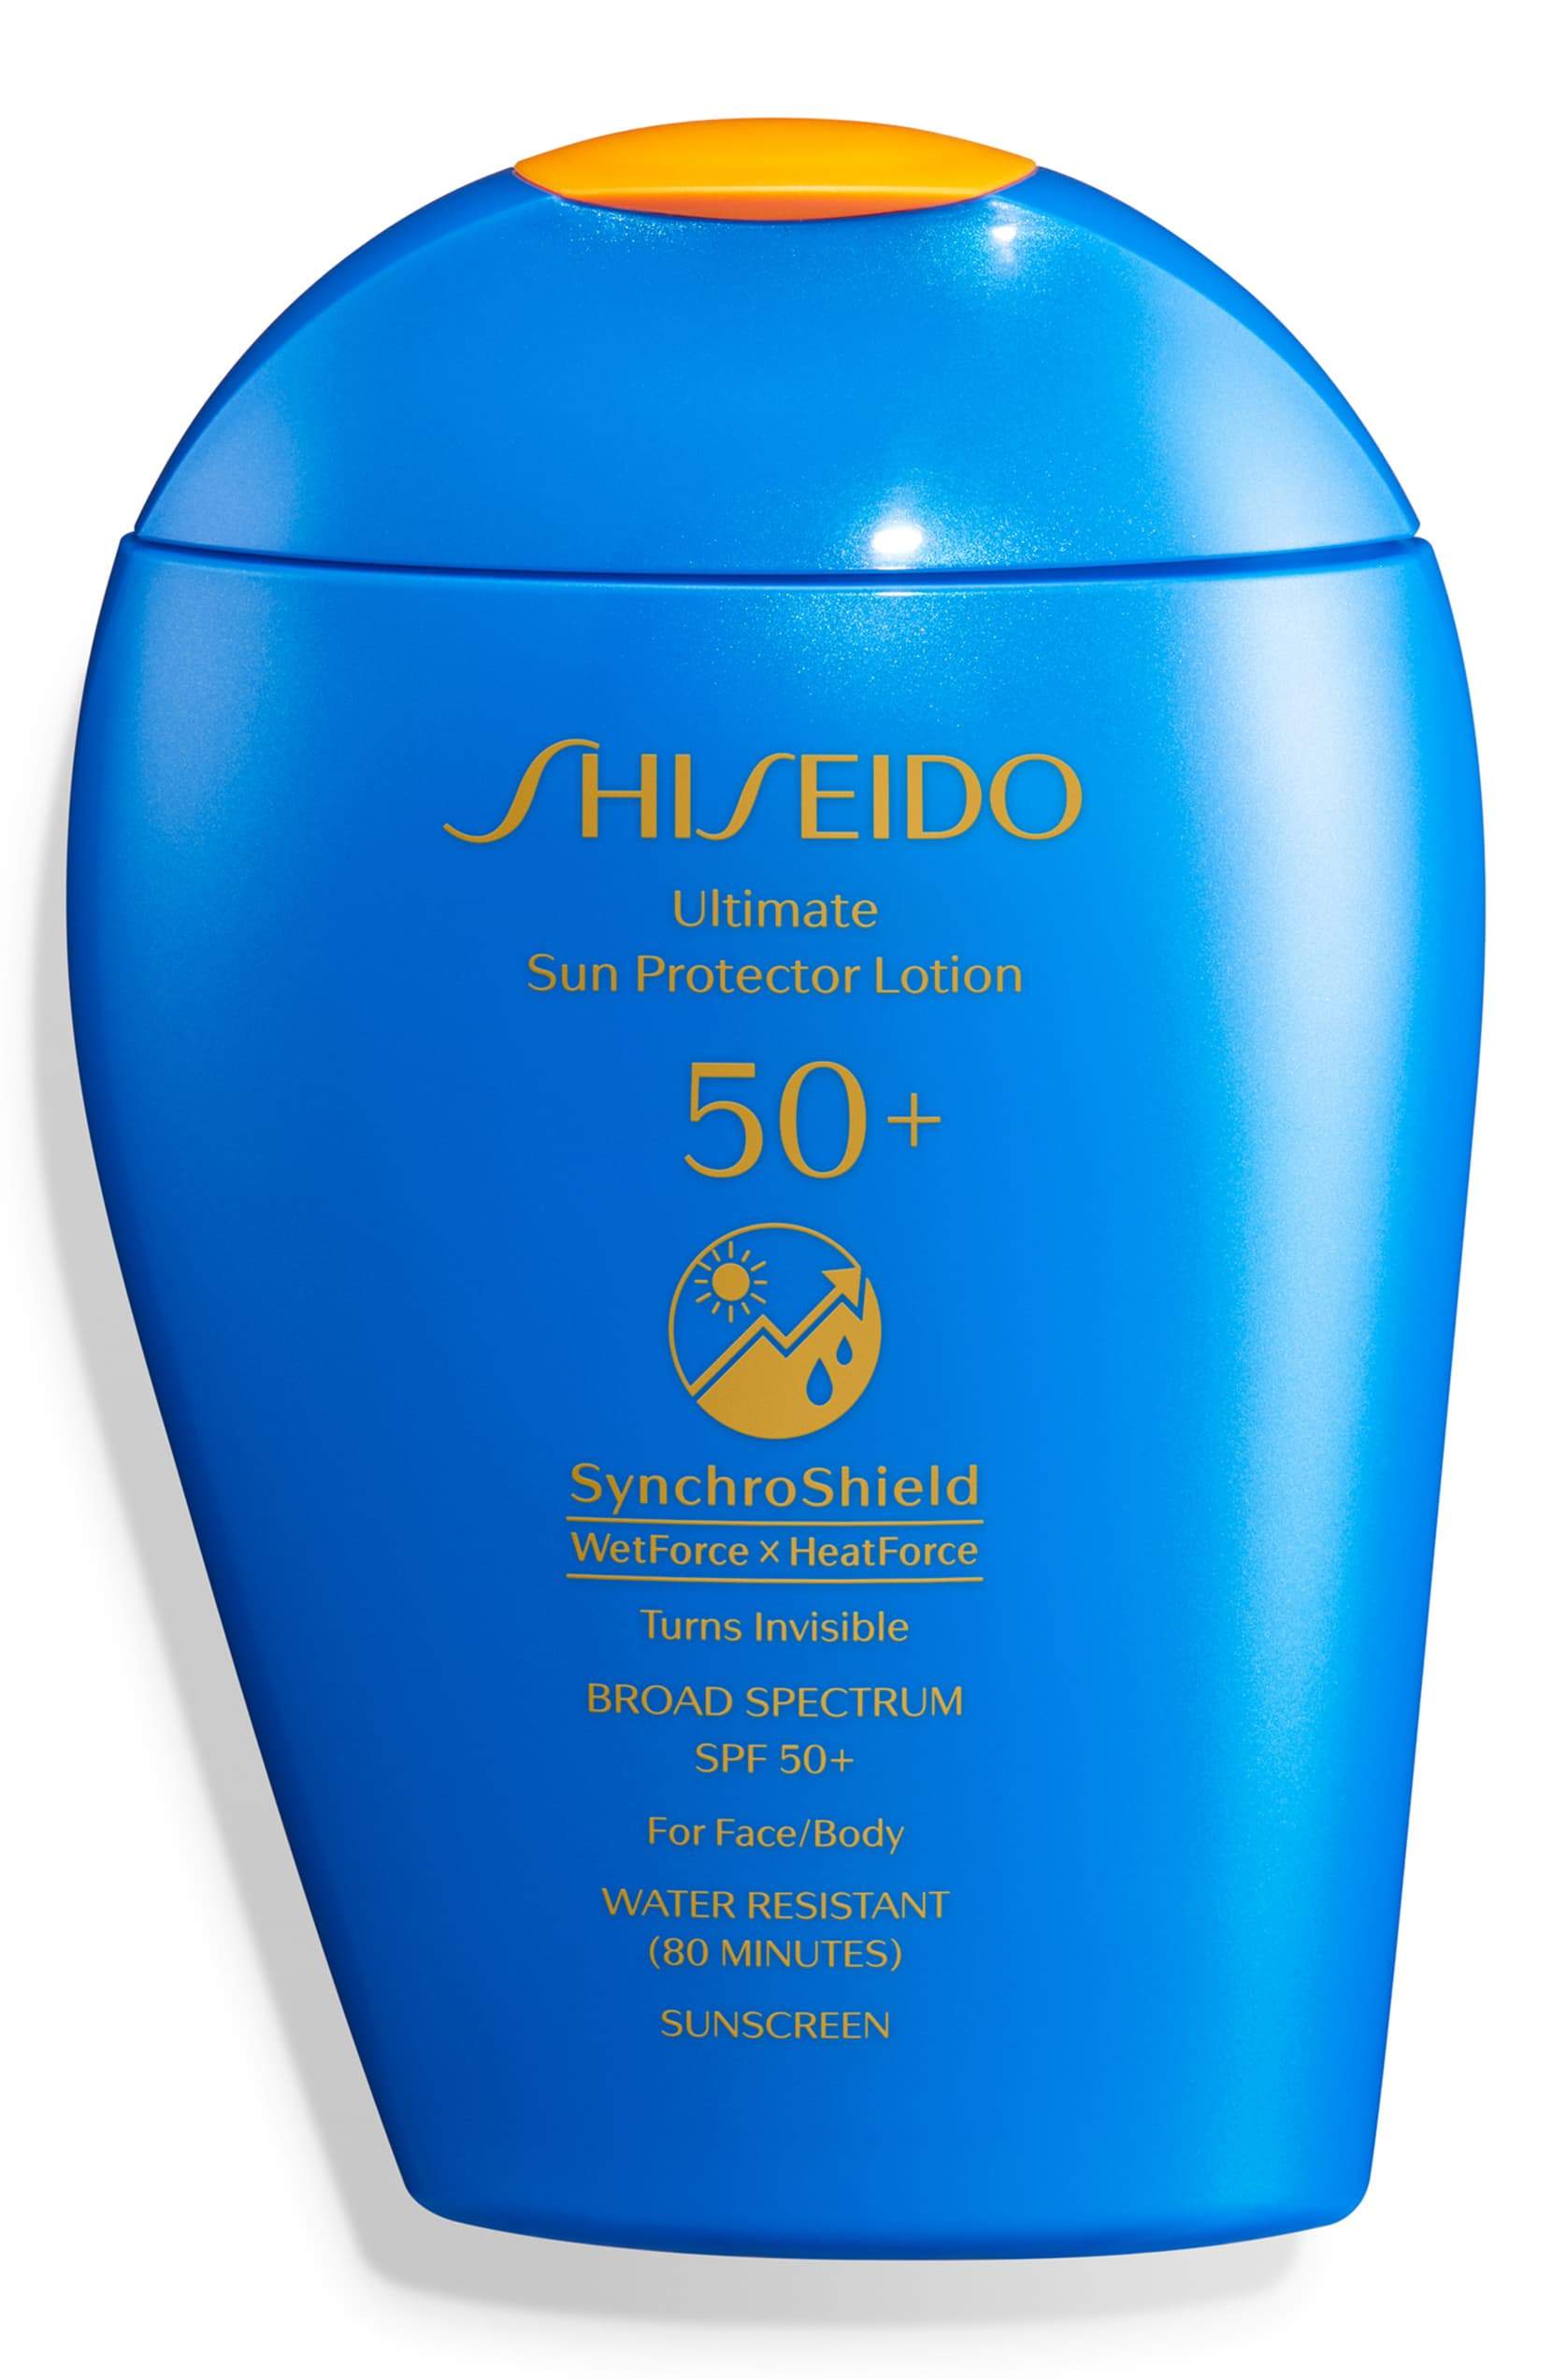 Shiseido Ultimate Sun Protector Lotion SPF 50+ Sunscreen, 50mL - eCosmeticWorld